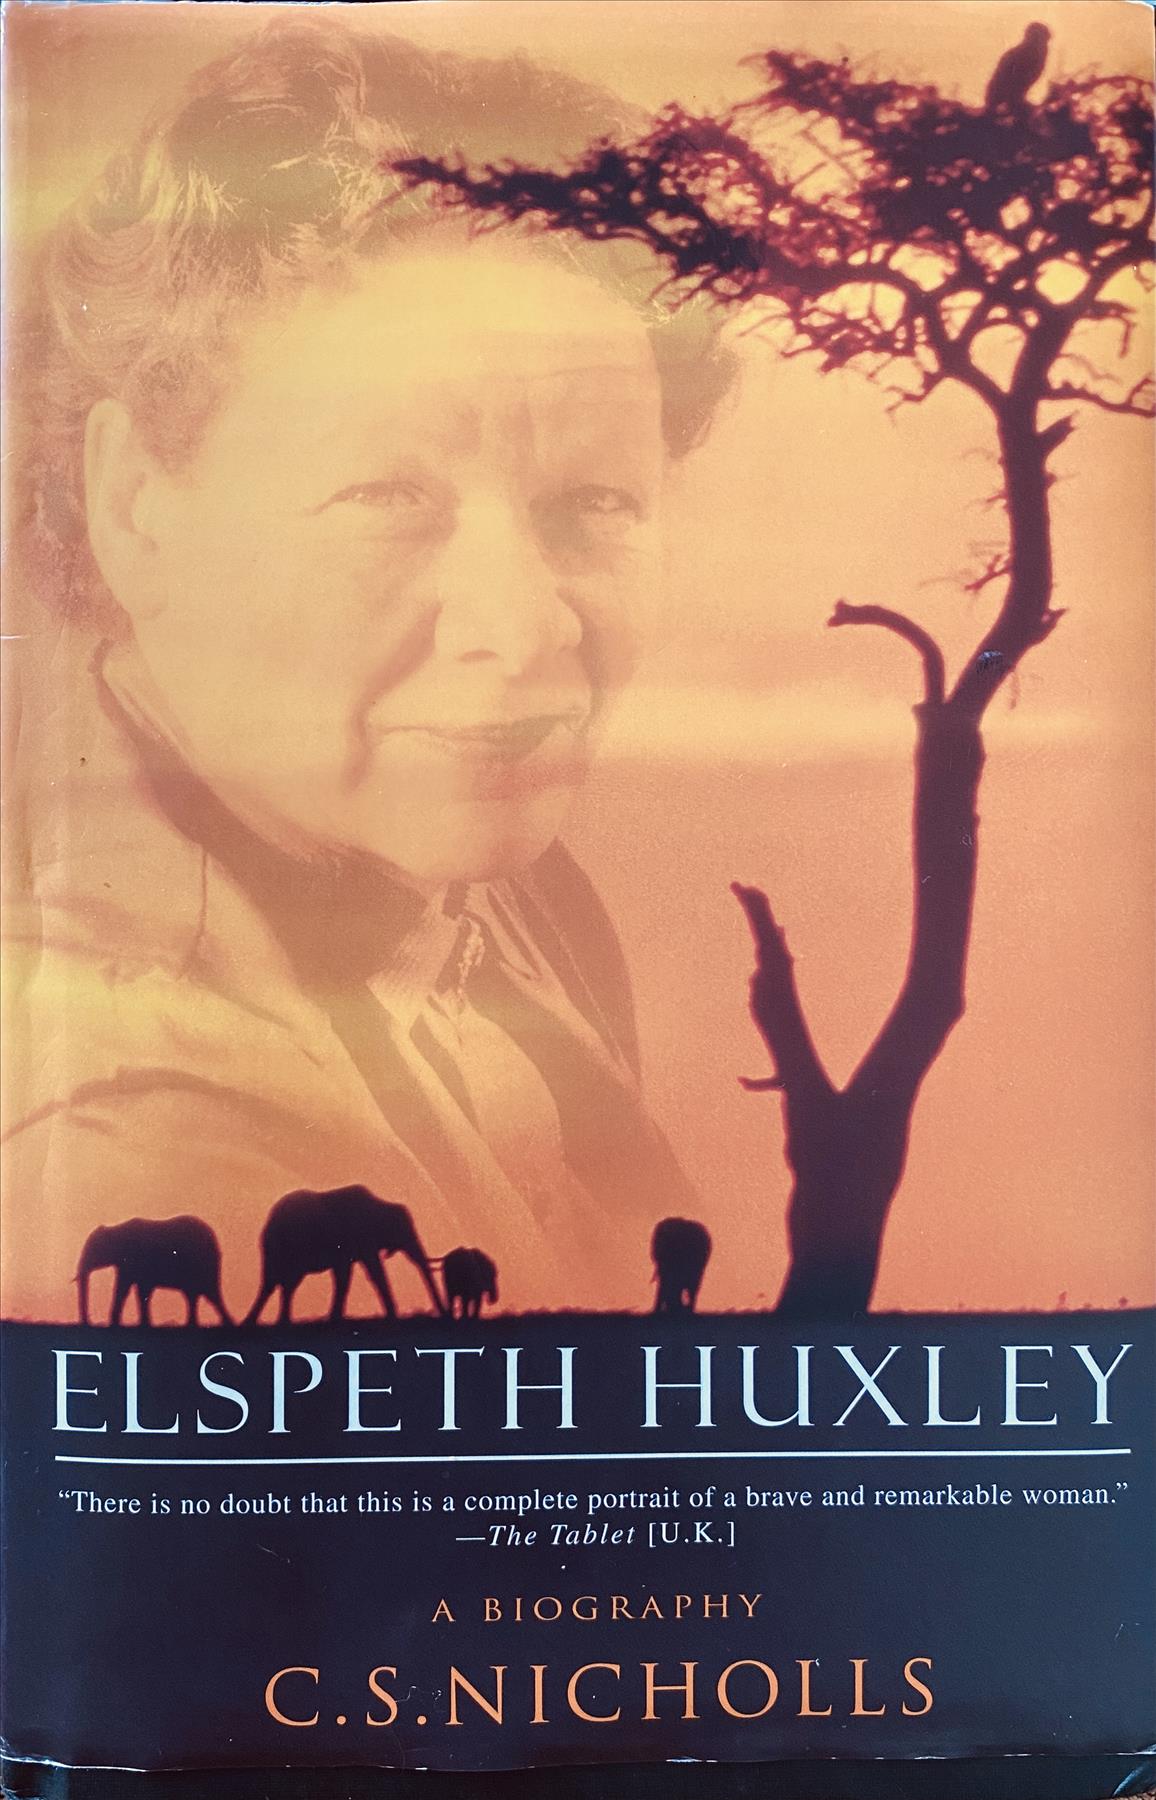 ELSPETH HUXLEY: A BIOGRAPHY by C. S. Nicholls (Thomas Dunne Books, 2002)